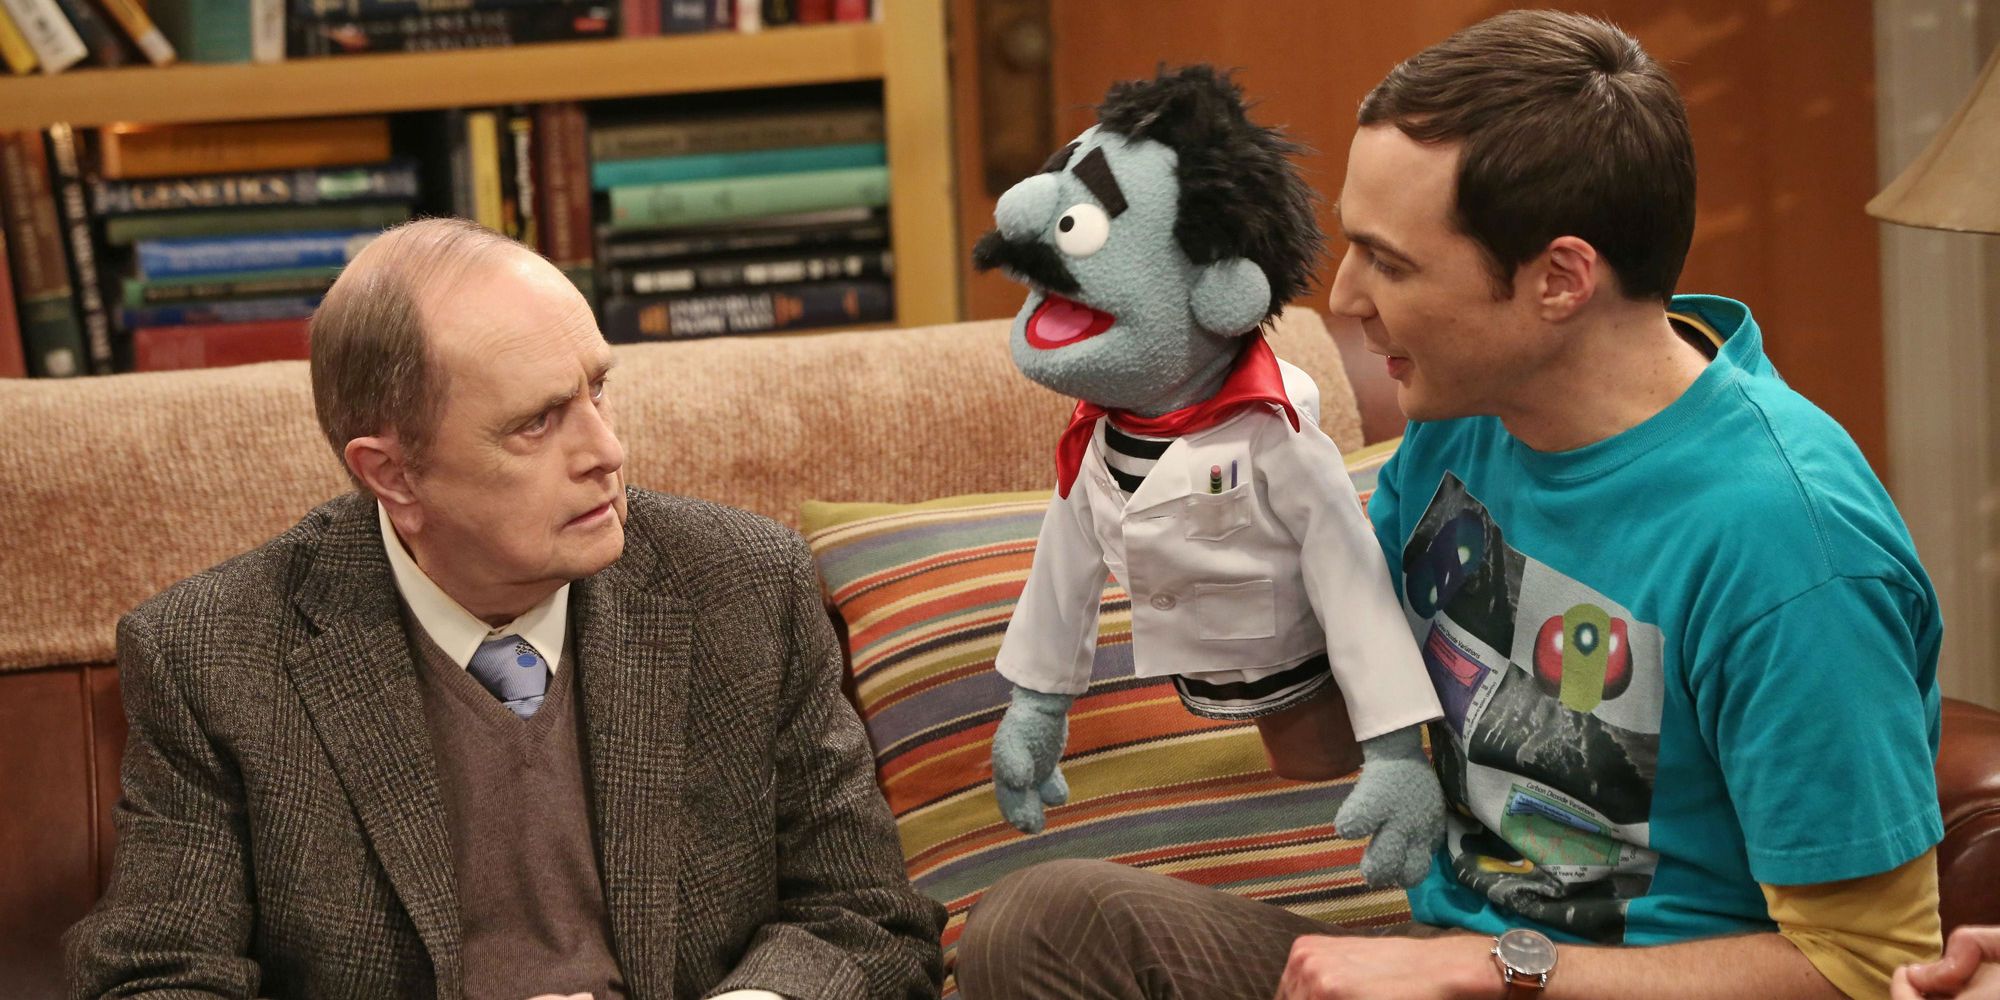 The Big Bang Theory Bob Newhart as Professor Proton with Sheldon